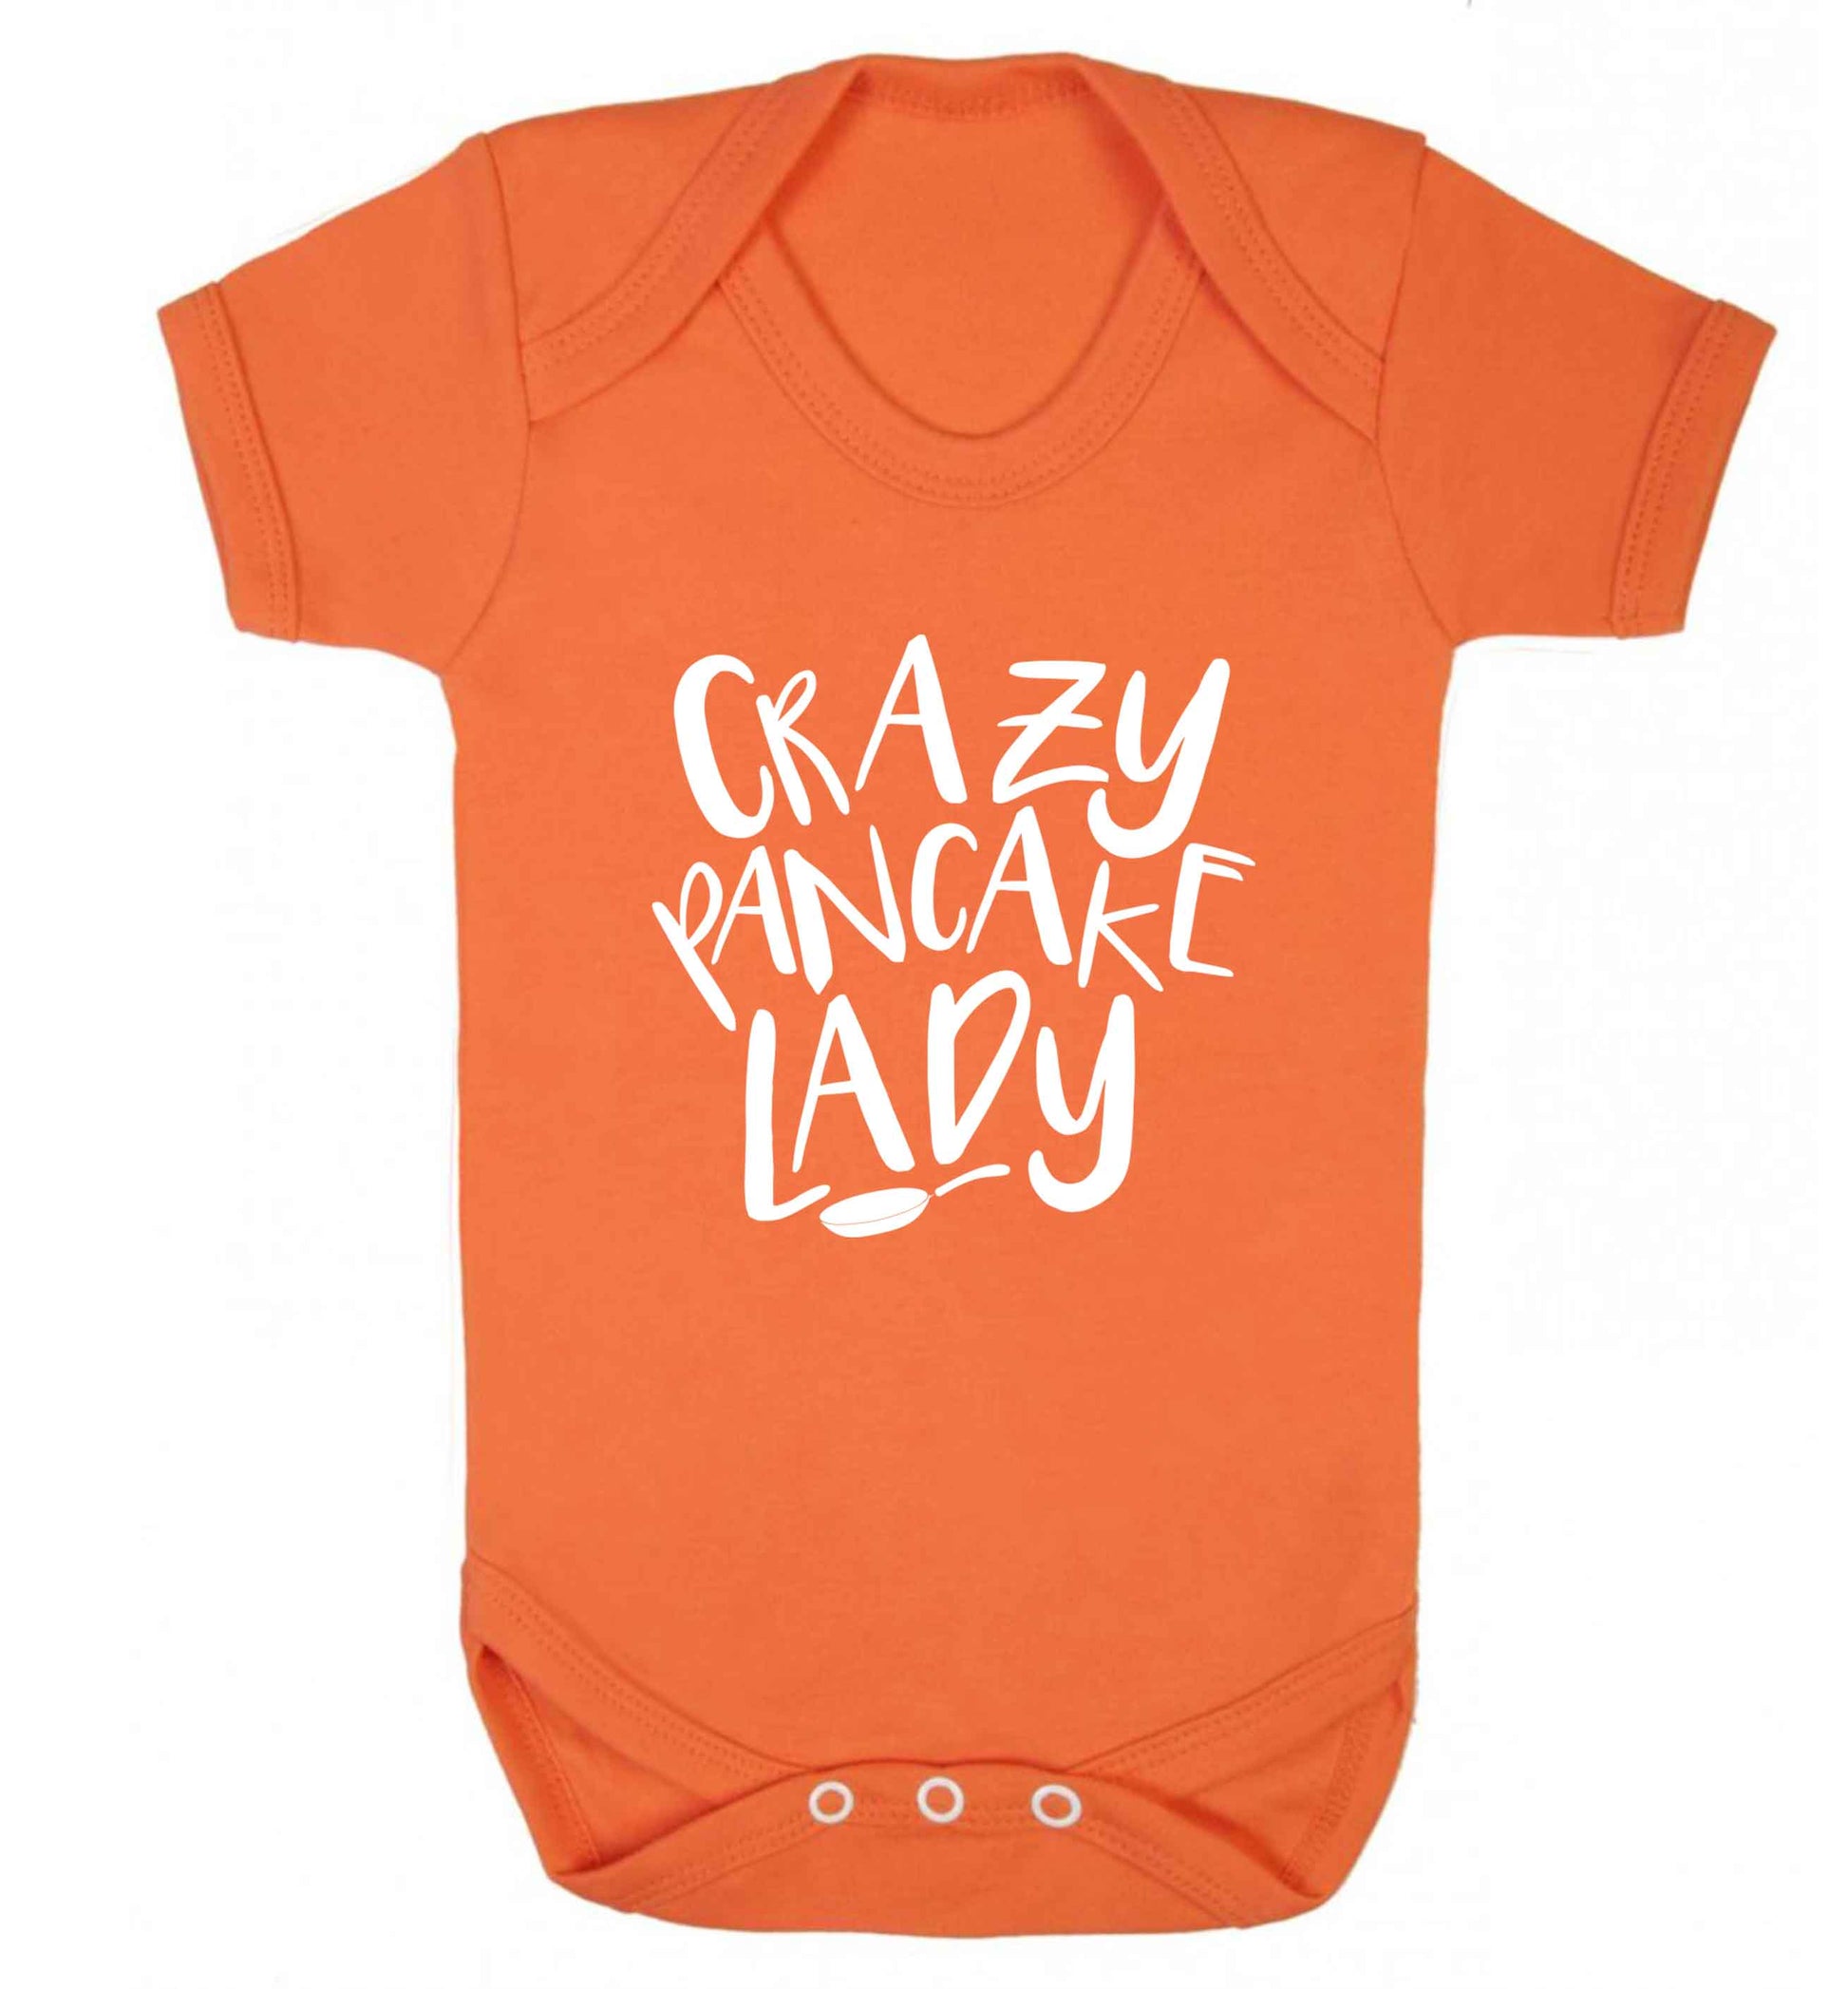 Crazy pancake lady baby vest orange 18-24 months